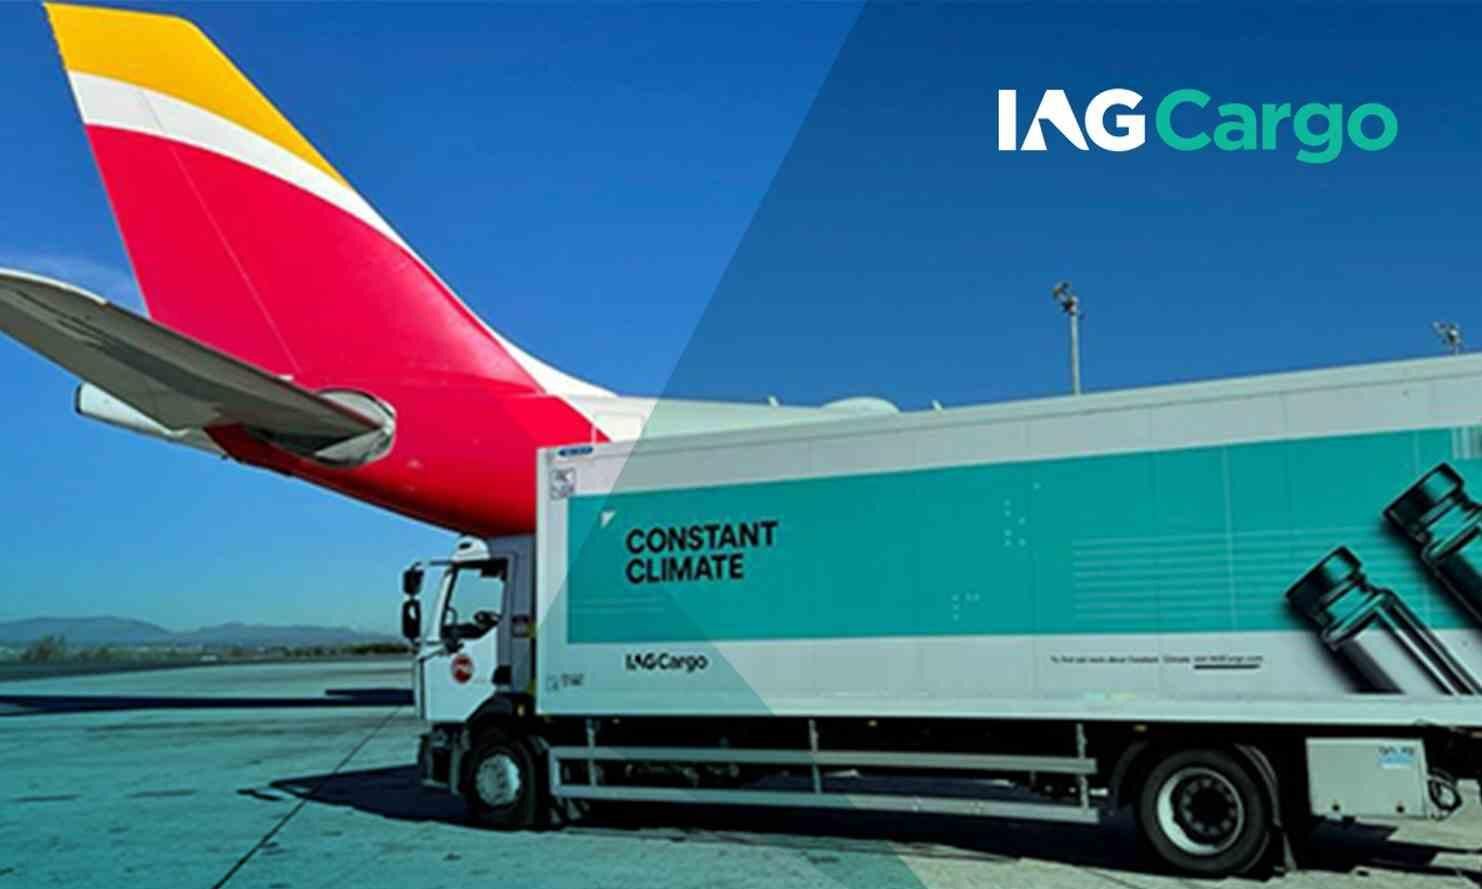 Heathrow-based IAG Cargo kickstarts graduate scheme